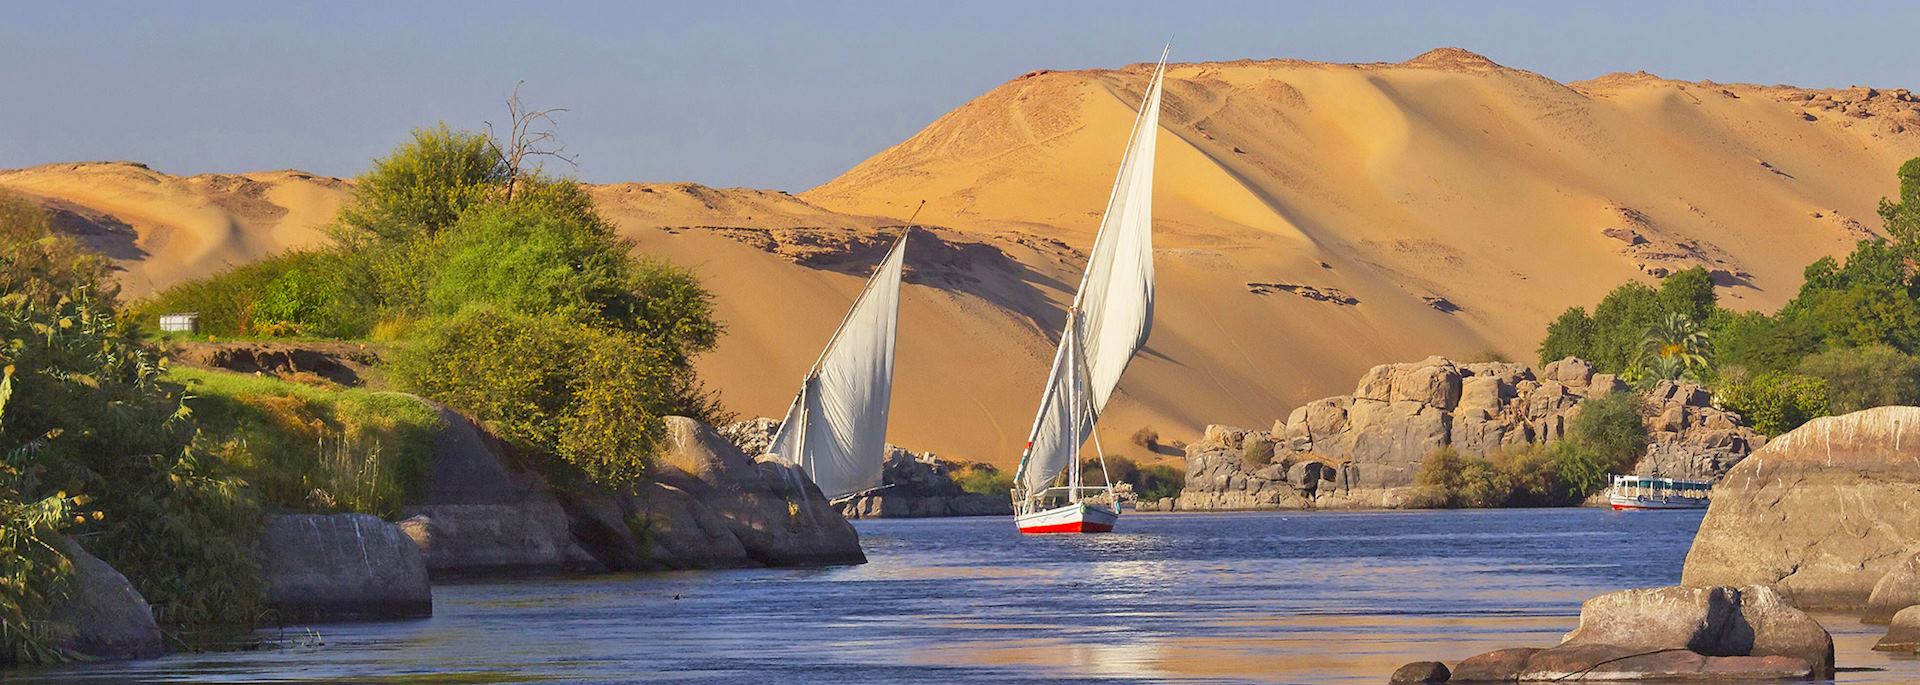 Sailing boats on the Nile near Aswan